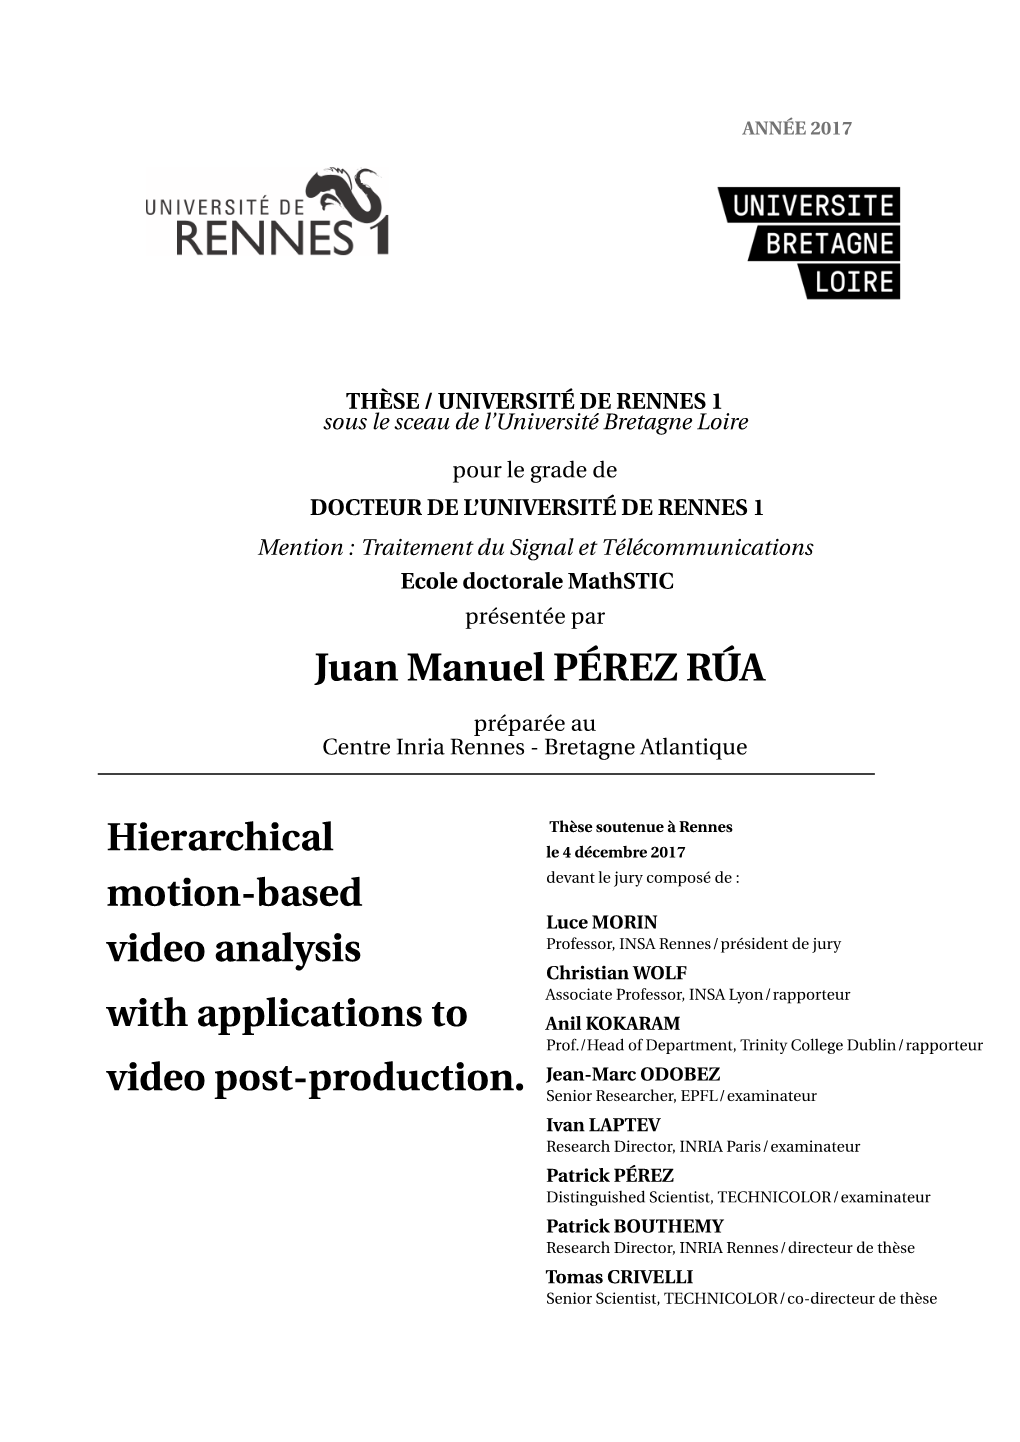 Juan Manuel PÉREZ RÚA Hierarchical Motion-Based Video